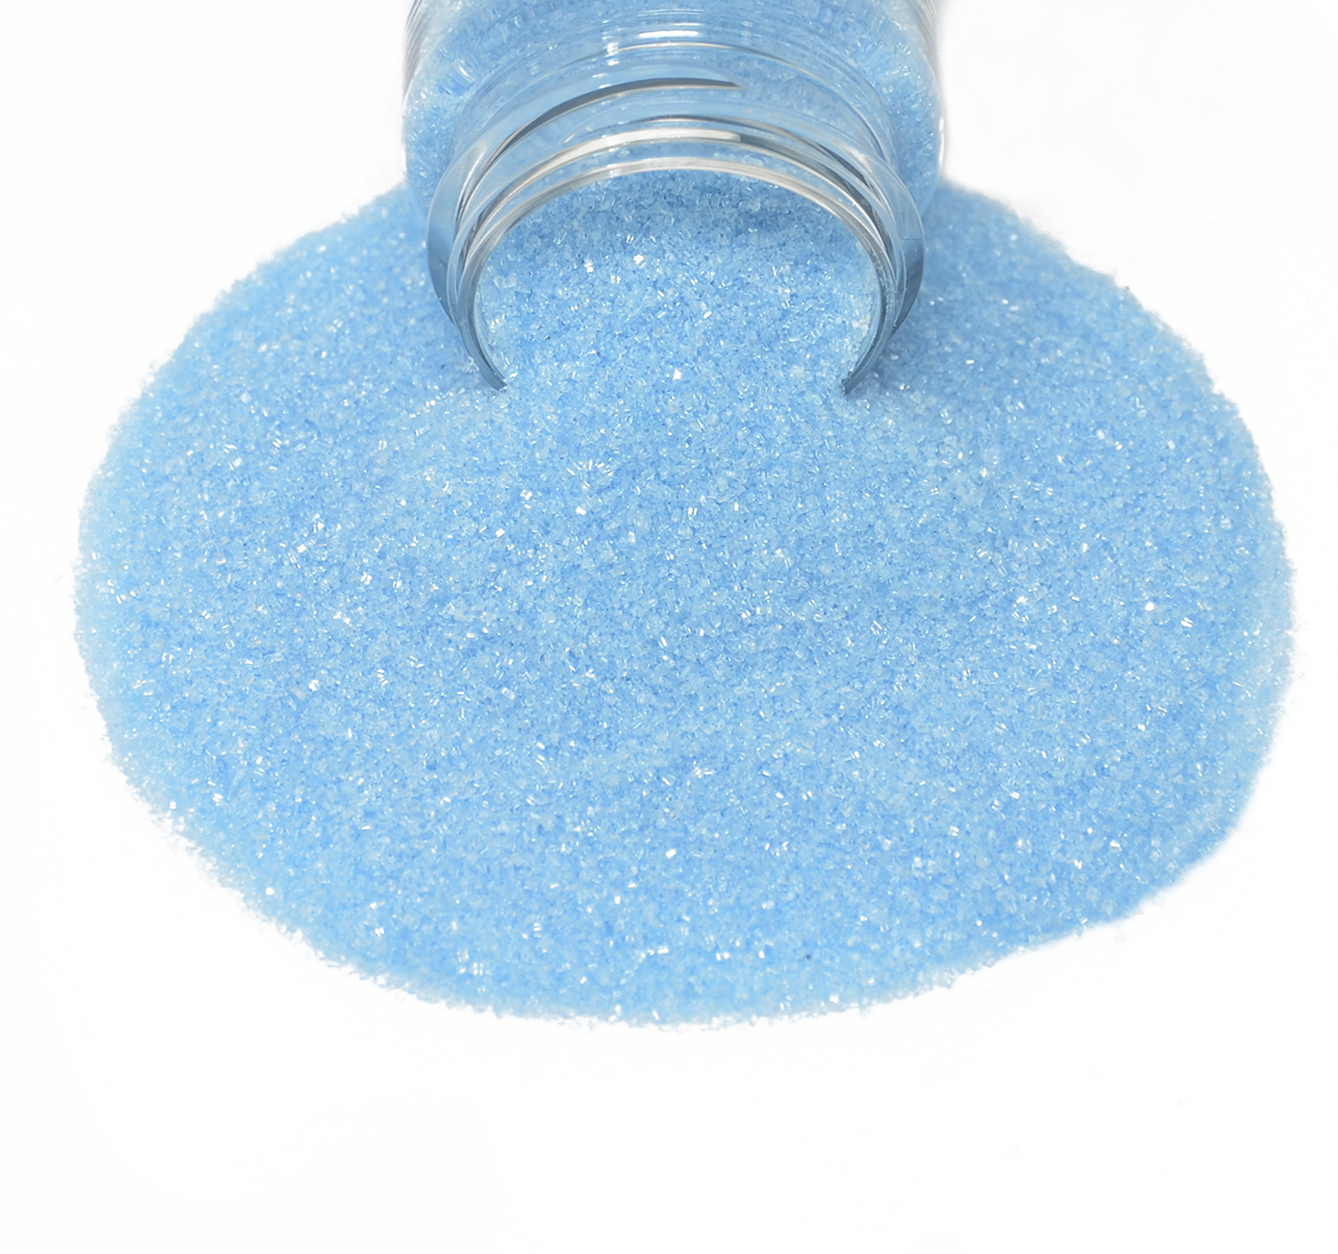 Chalcedony - Pale Blue Sanding Sugar 4oz